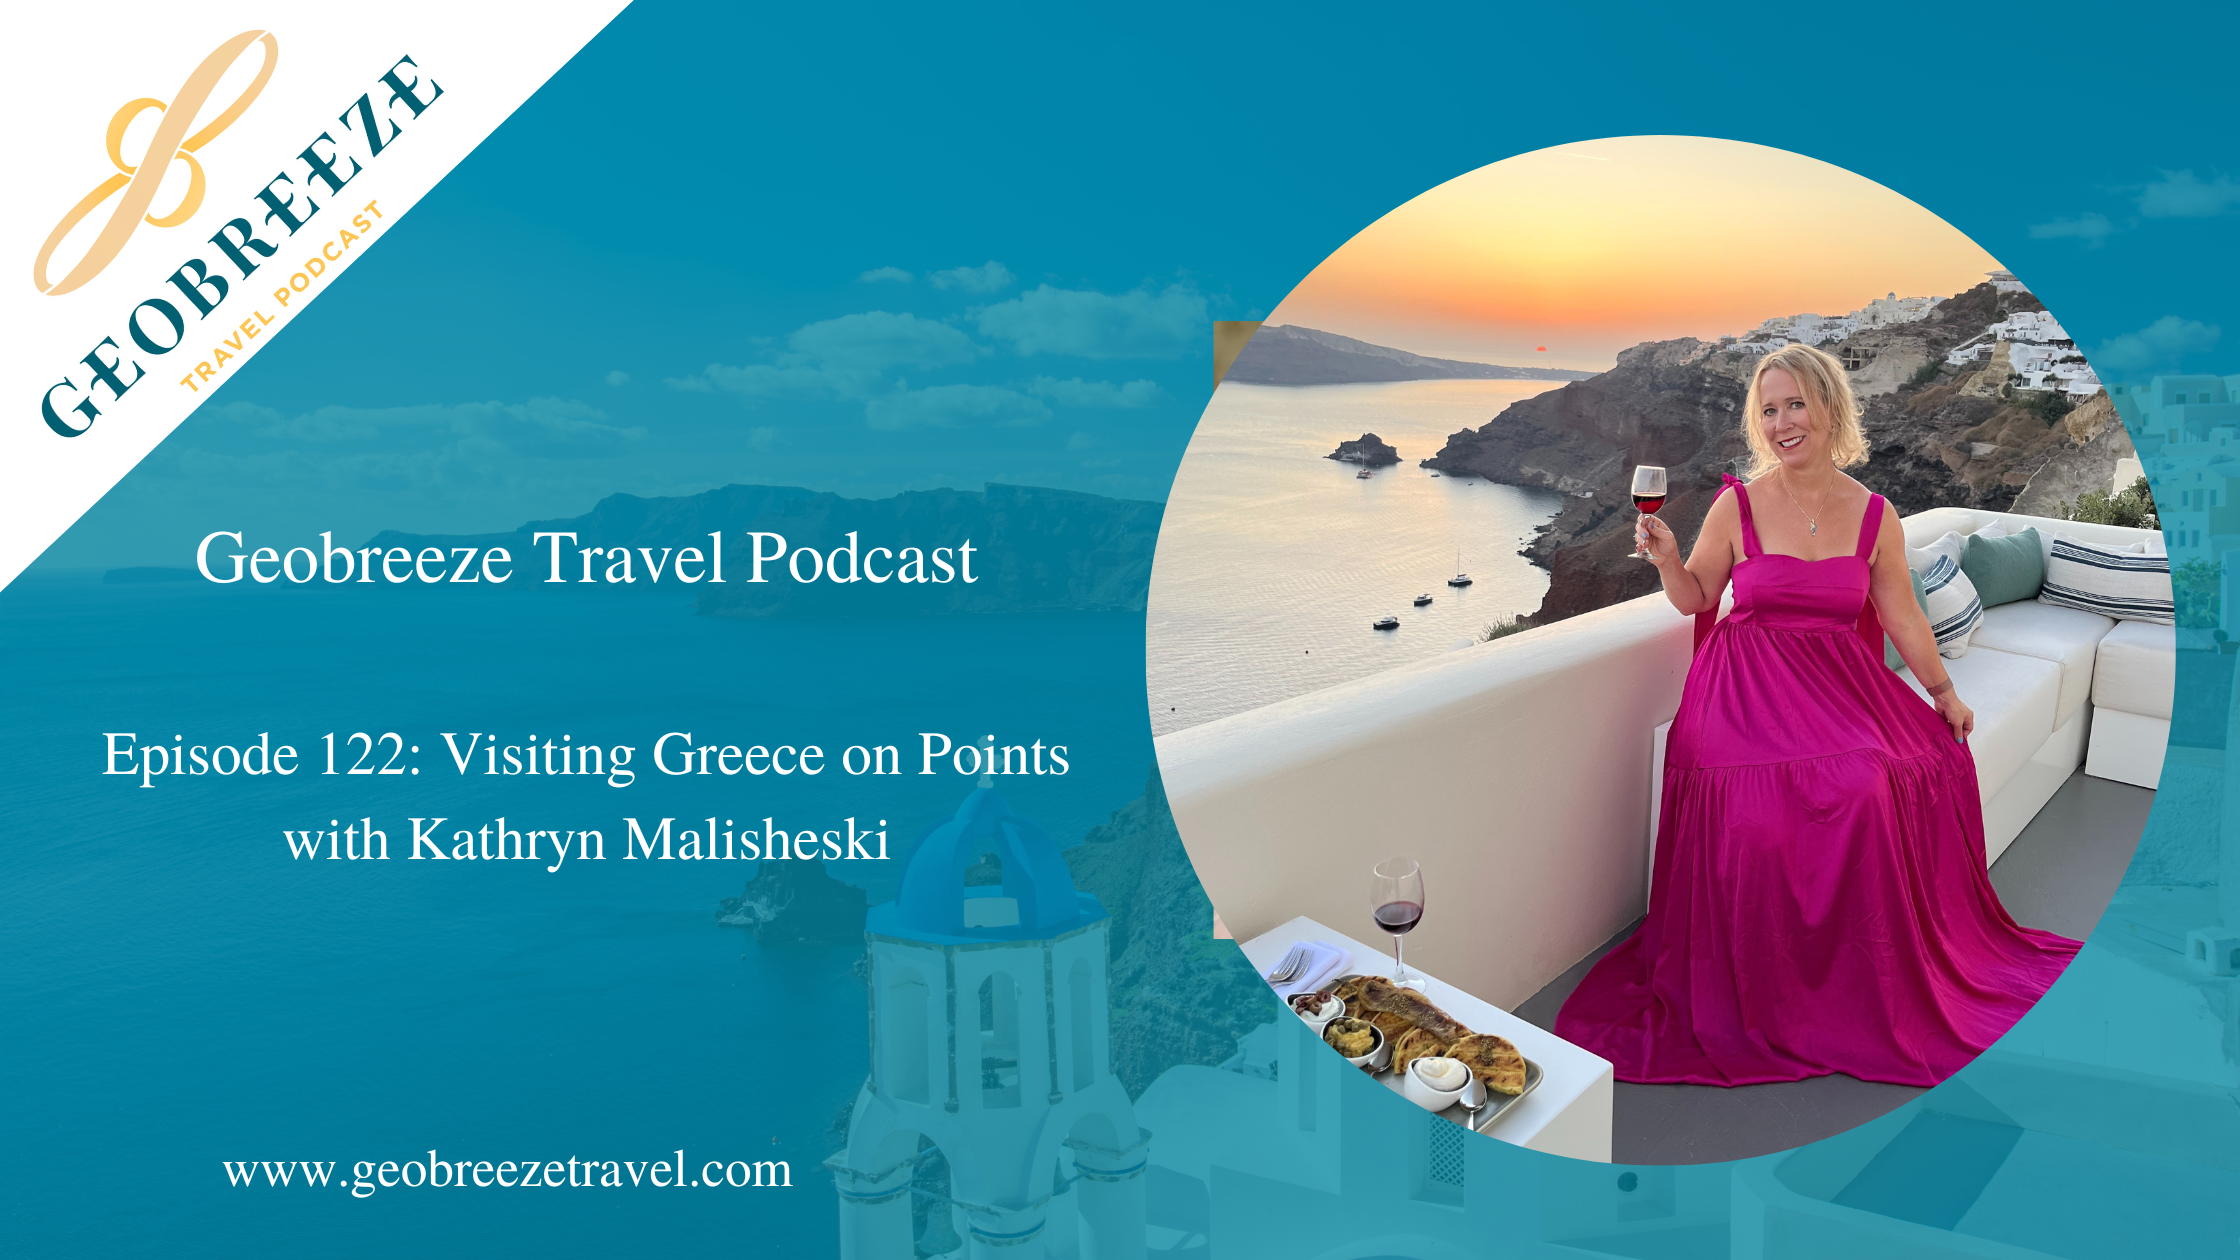 Episode 122: Visiting Greece on Points with Kathryn Malisheski